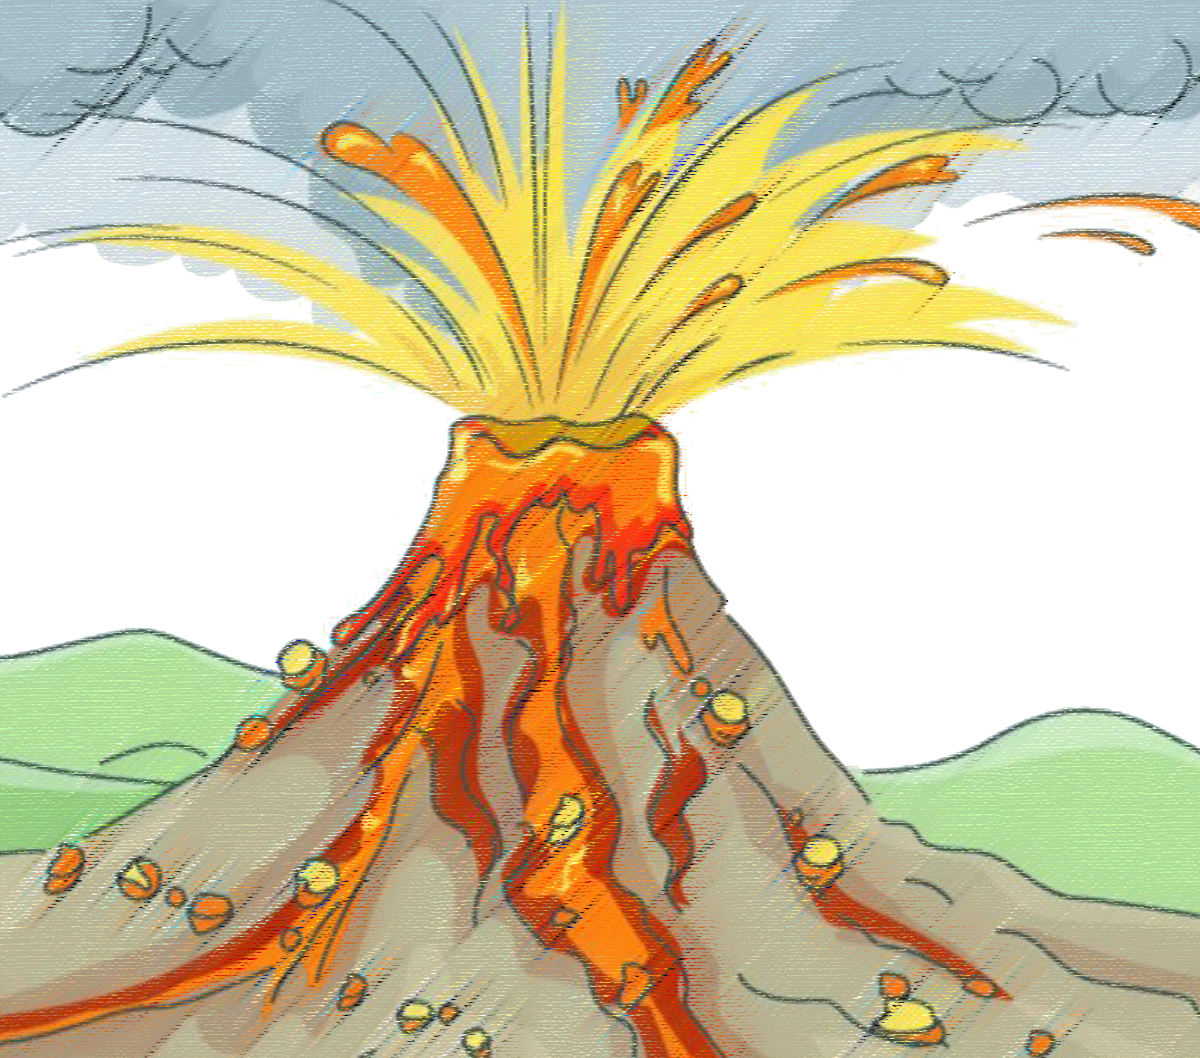 Volcanic ash xc ruption. Clipart rock volcano